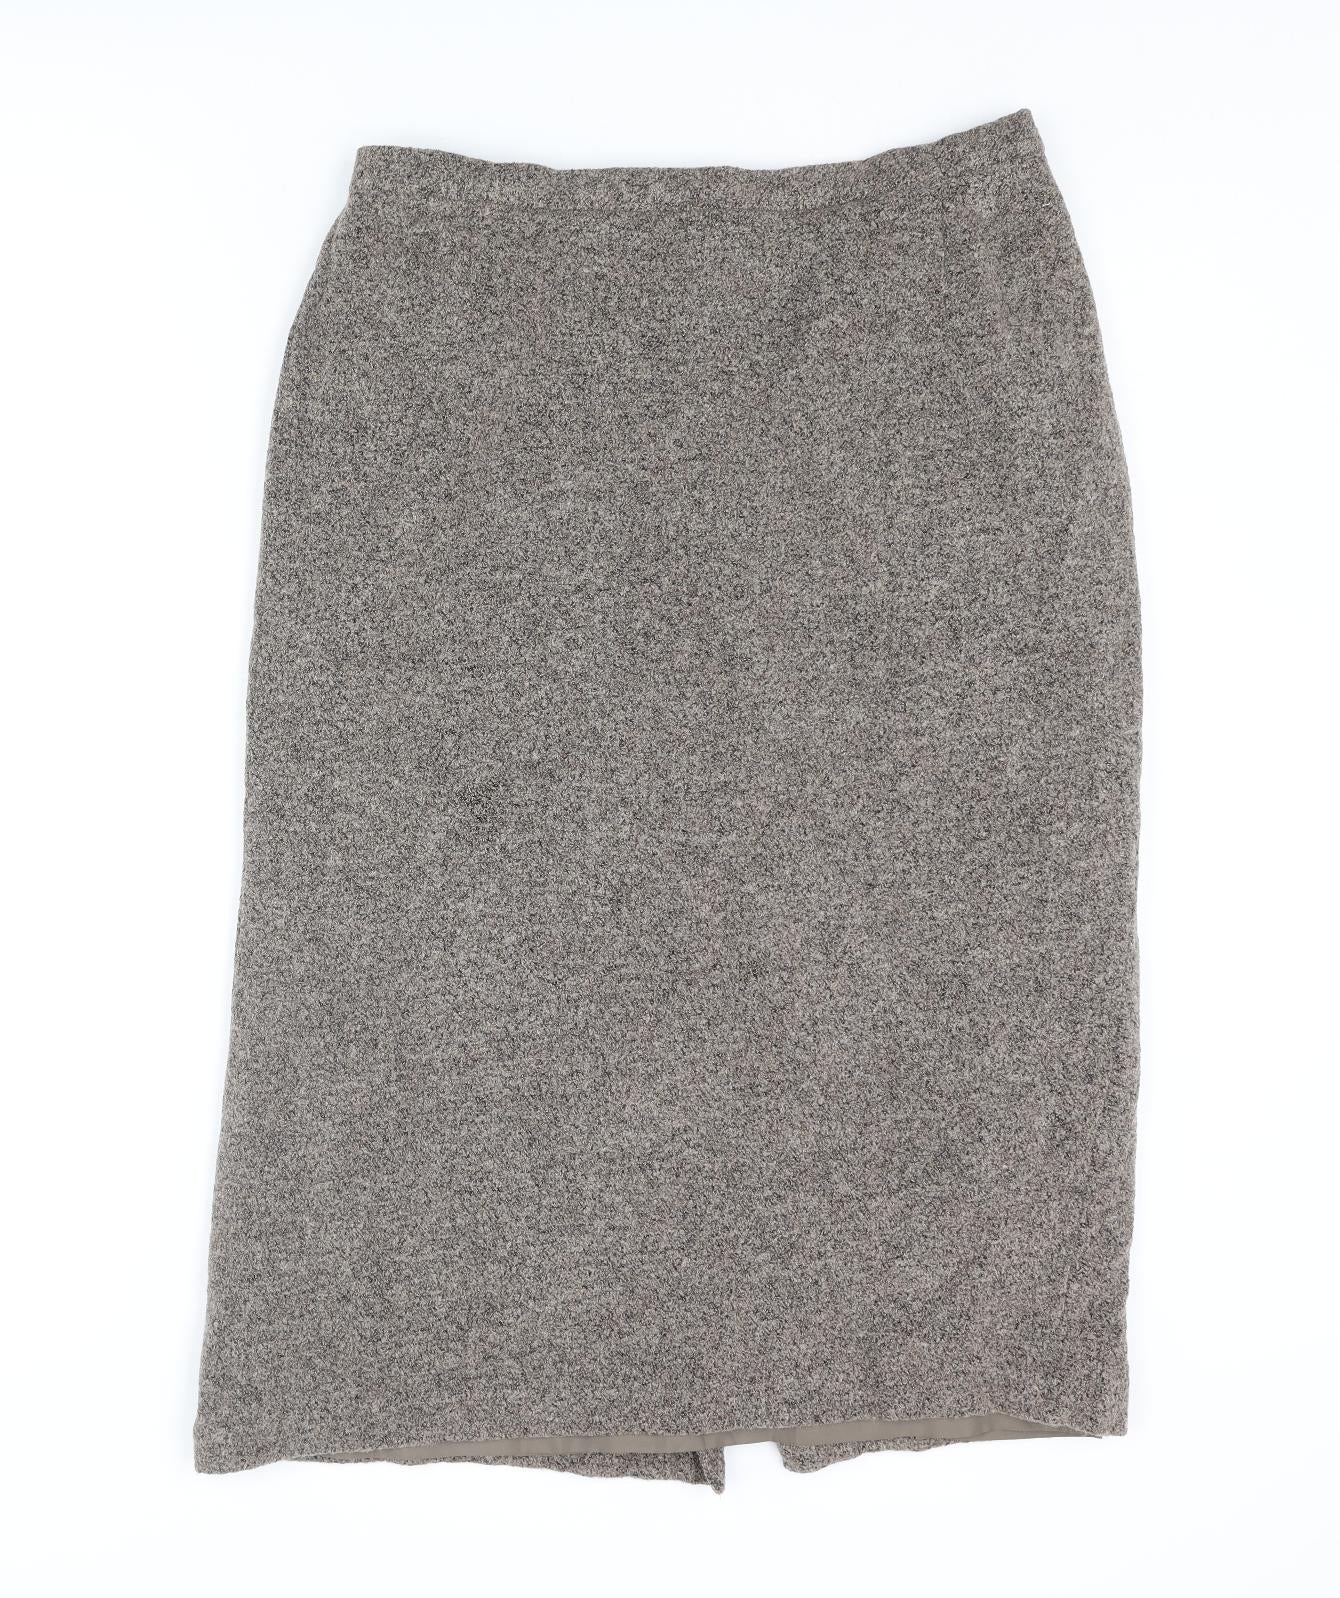 Eastex Womens Beige Wool A-Line Skirt Size 16 Zip